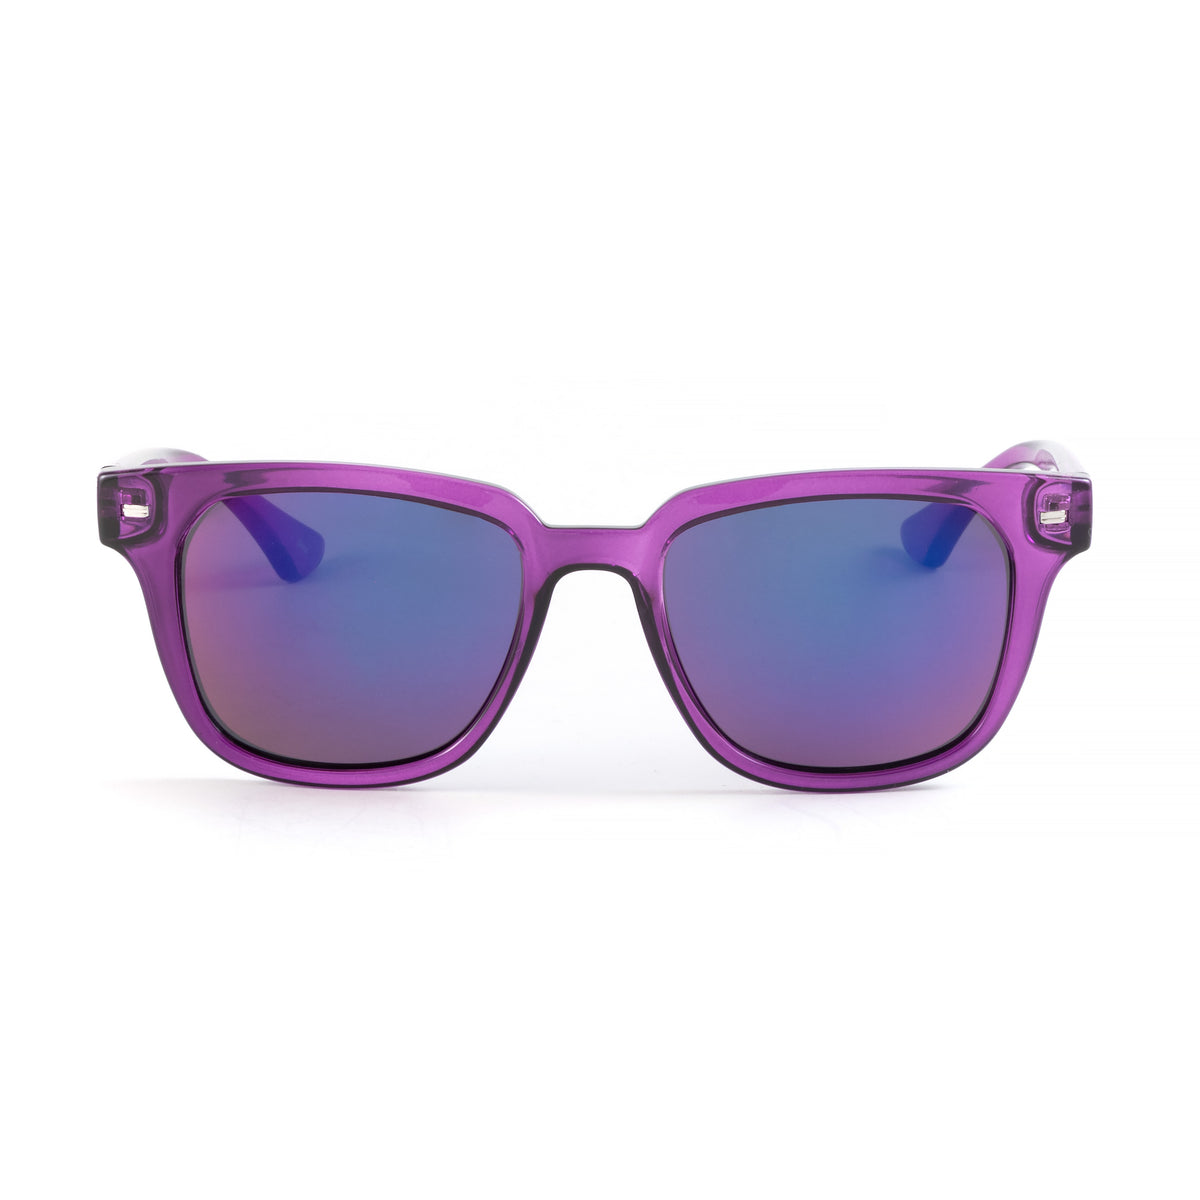 Viahda Polarized Sports Sunglasses – Womensgolfgear